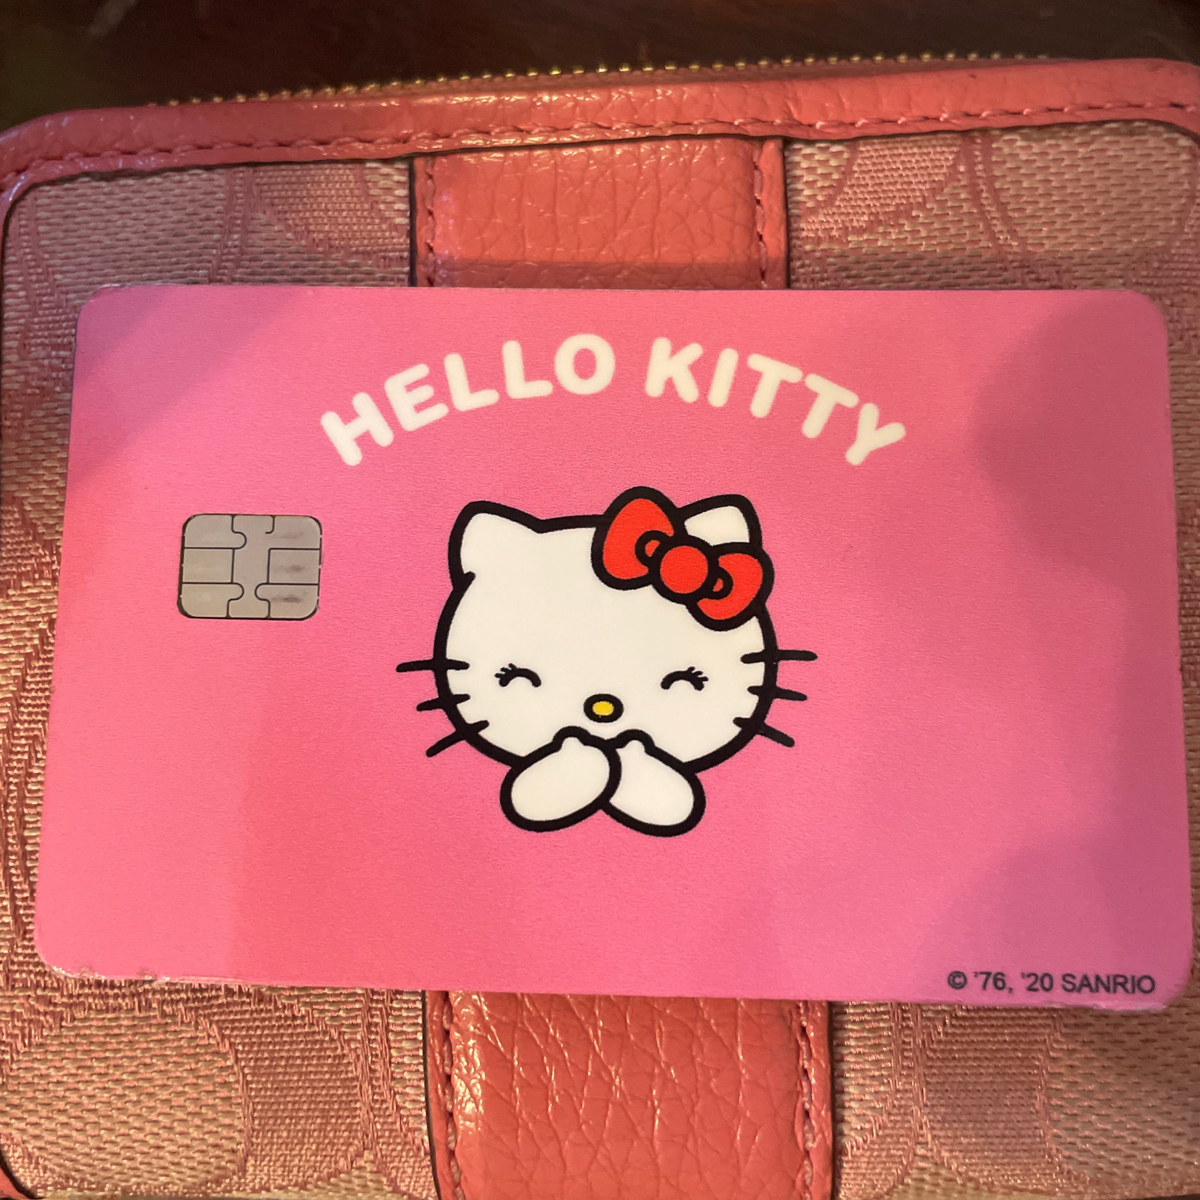 Customer showcasing their personalized hello kitty debit credit card skin